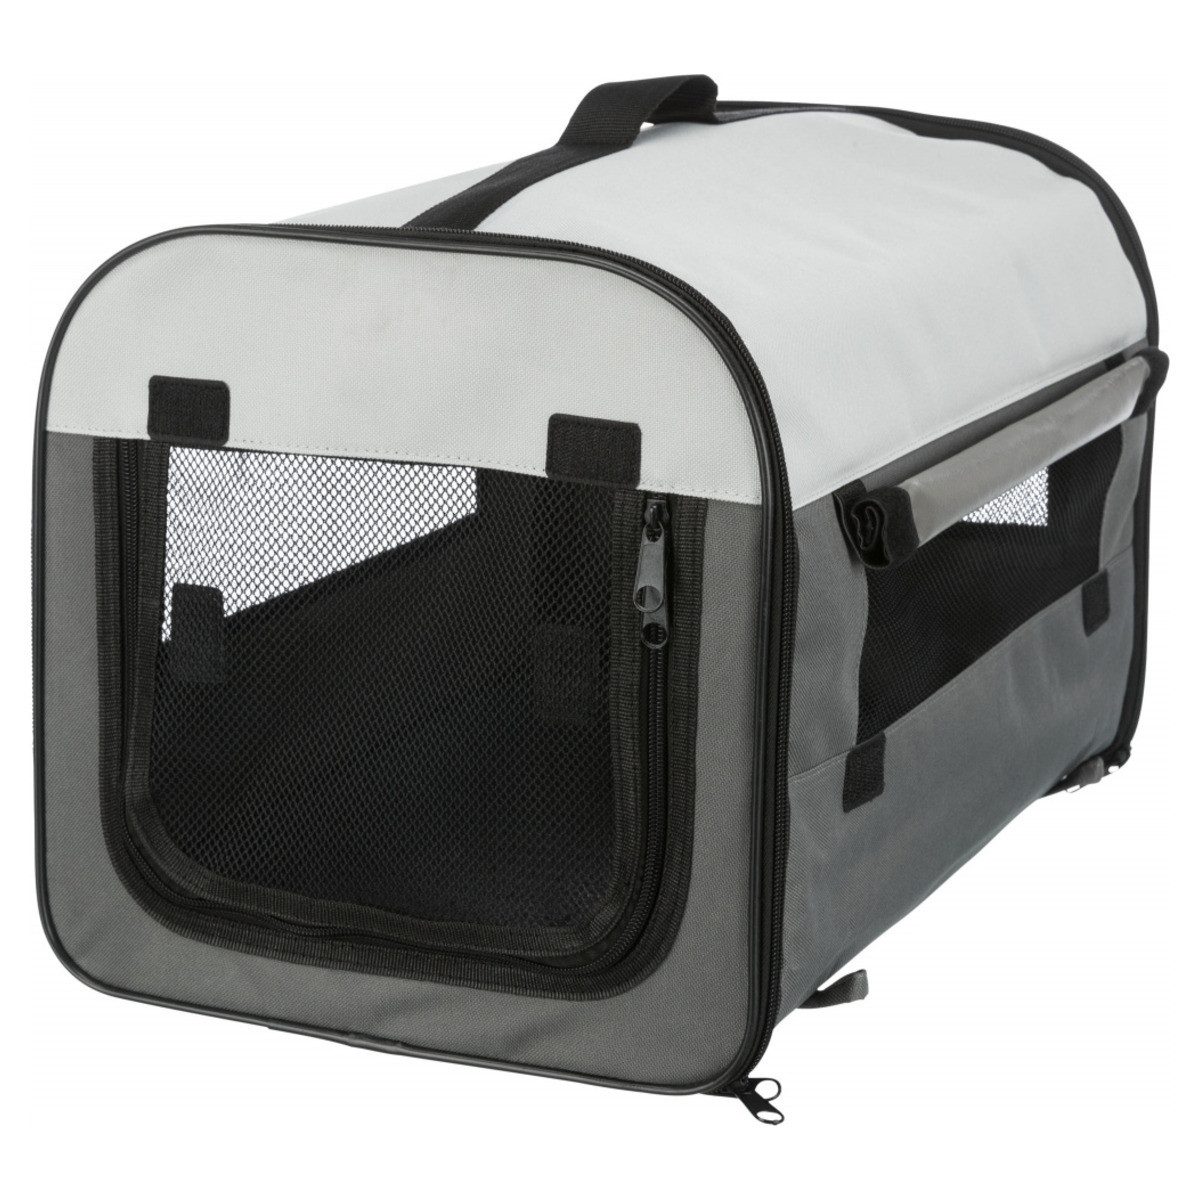 TRIXIE Hunde-Transportbox Mobile Kennel Basic dunkelgrau/hellgrau